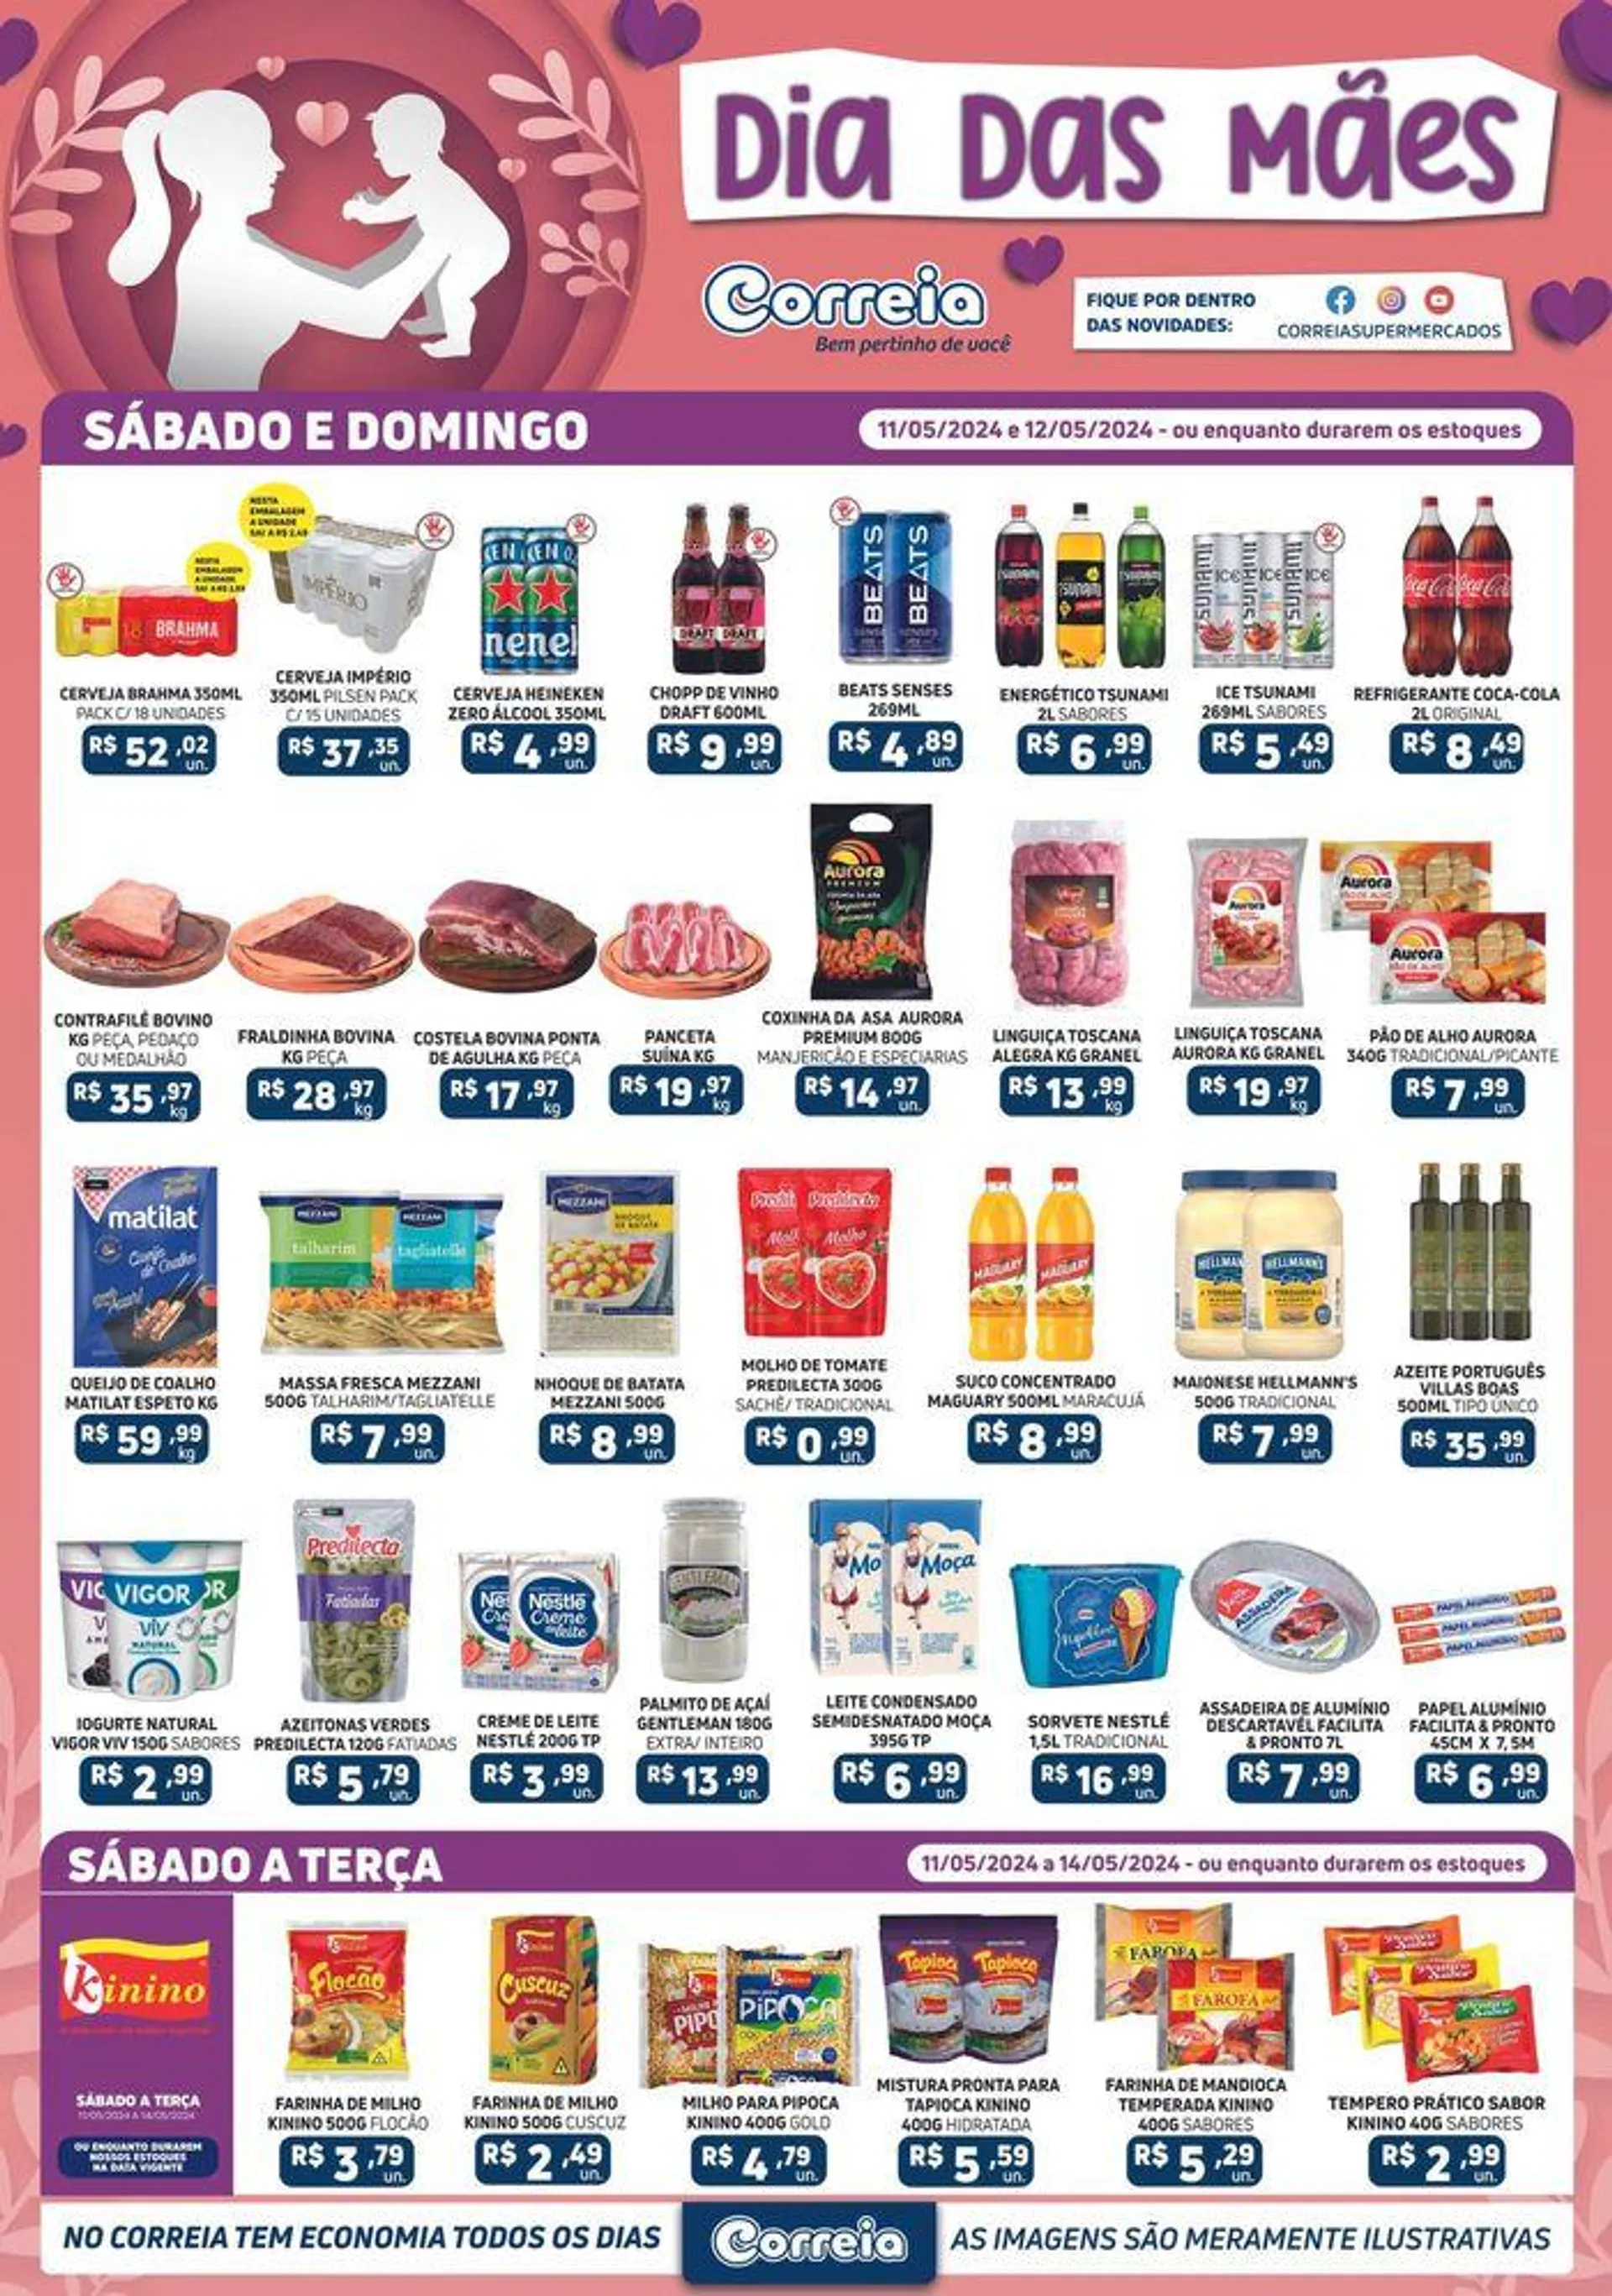 Ofertas Supermercados Correia - 1